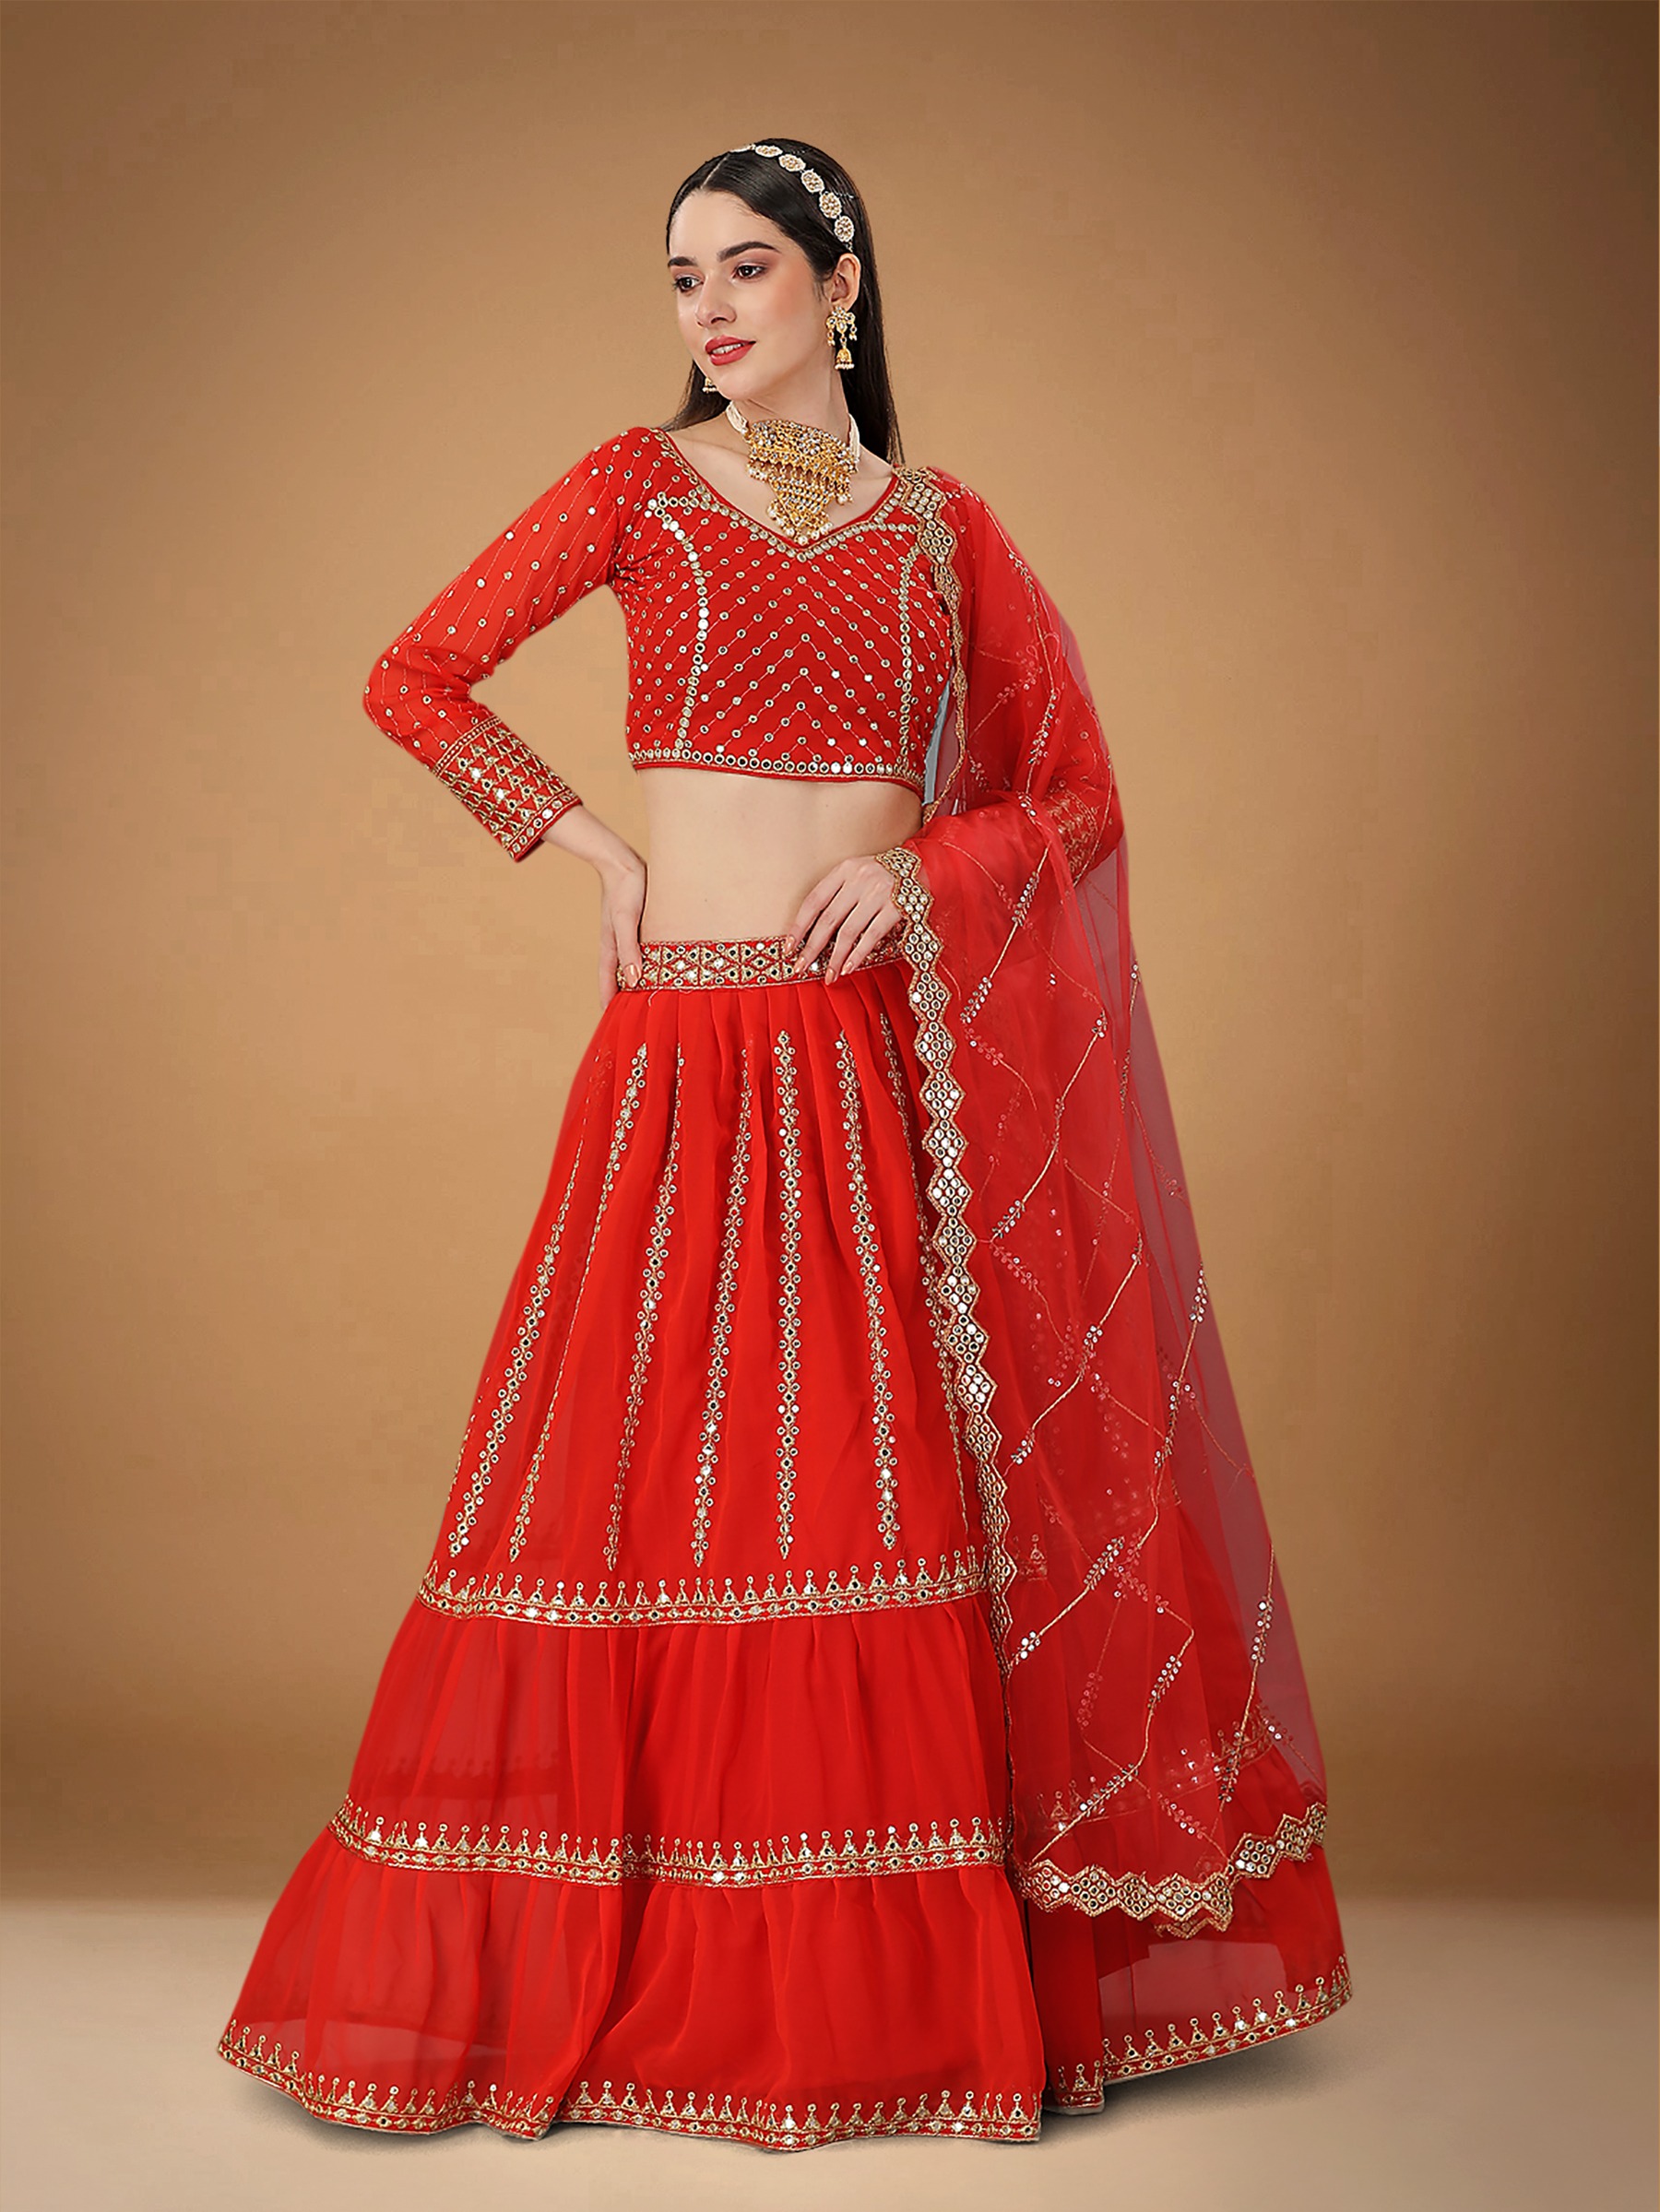 Statement Bridal Lehenga Designs -Storyvogue.com | Simple engagement dress,  Kerala engagement dress, Beautiful casual dresses